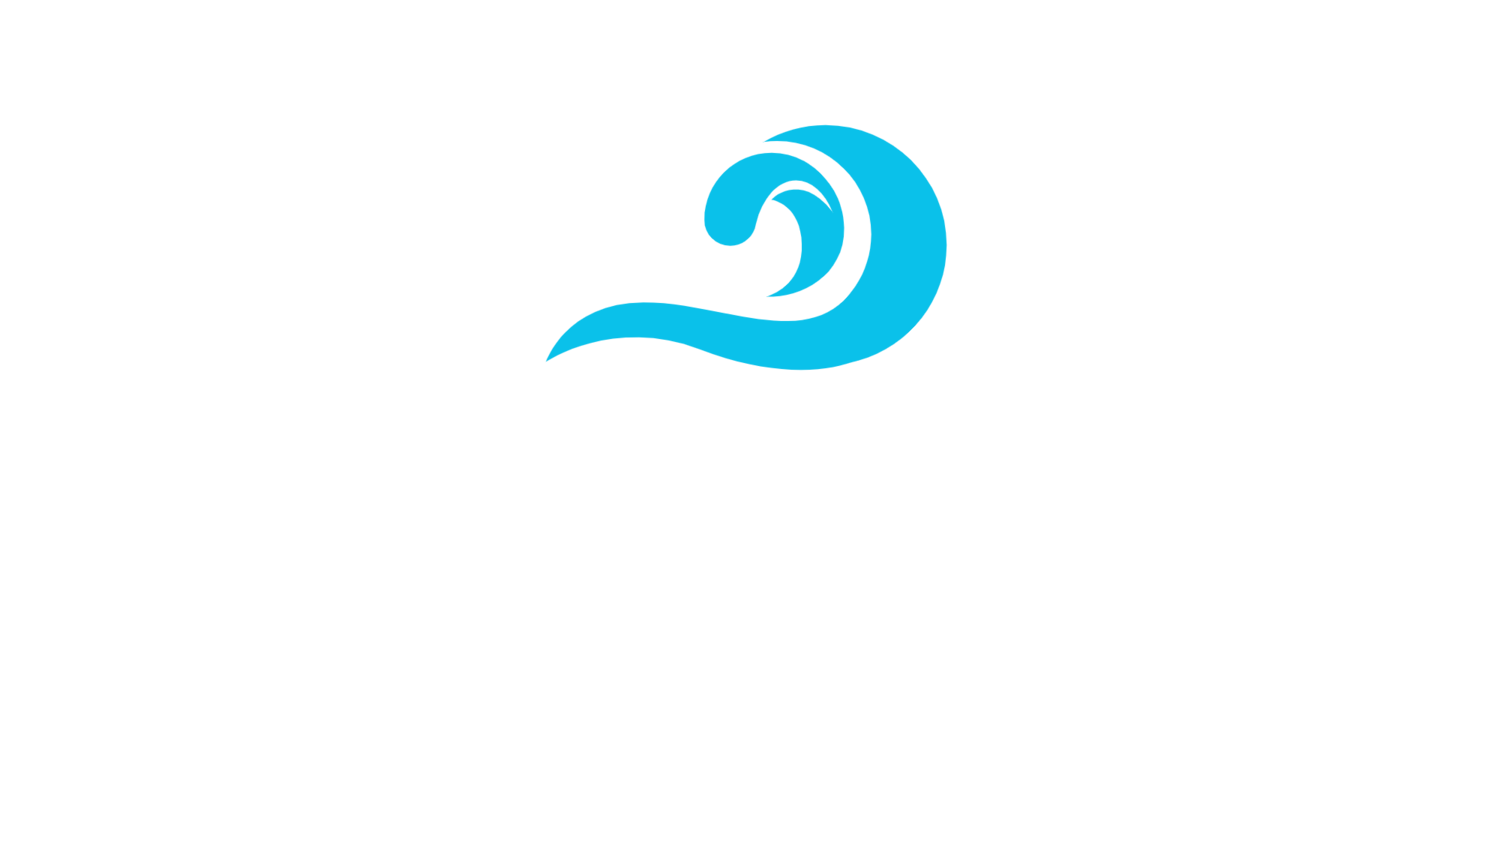 Hifu Kliniek Nederland